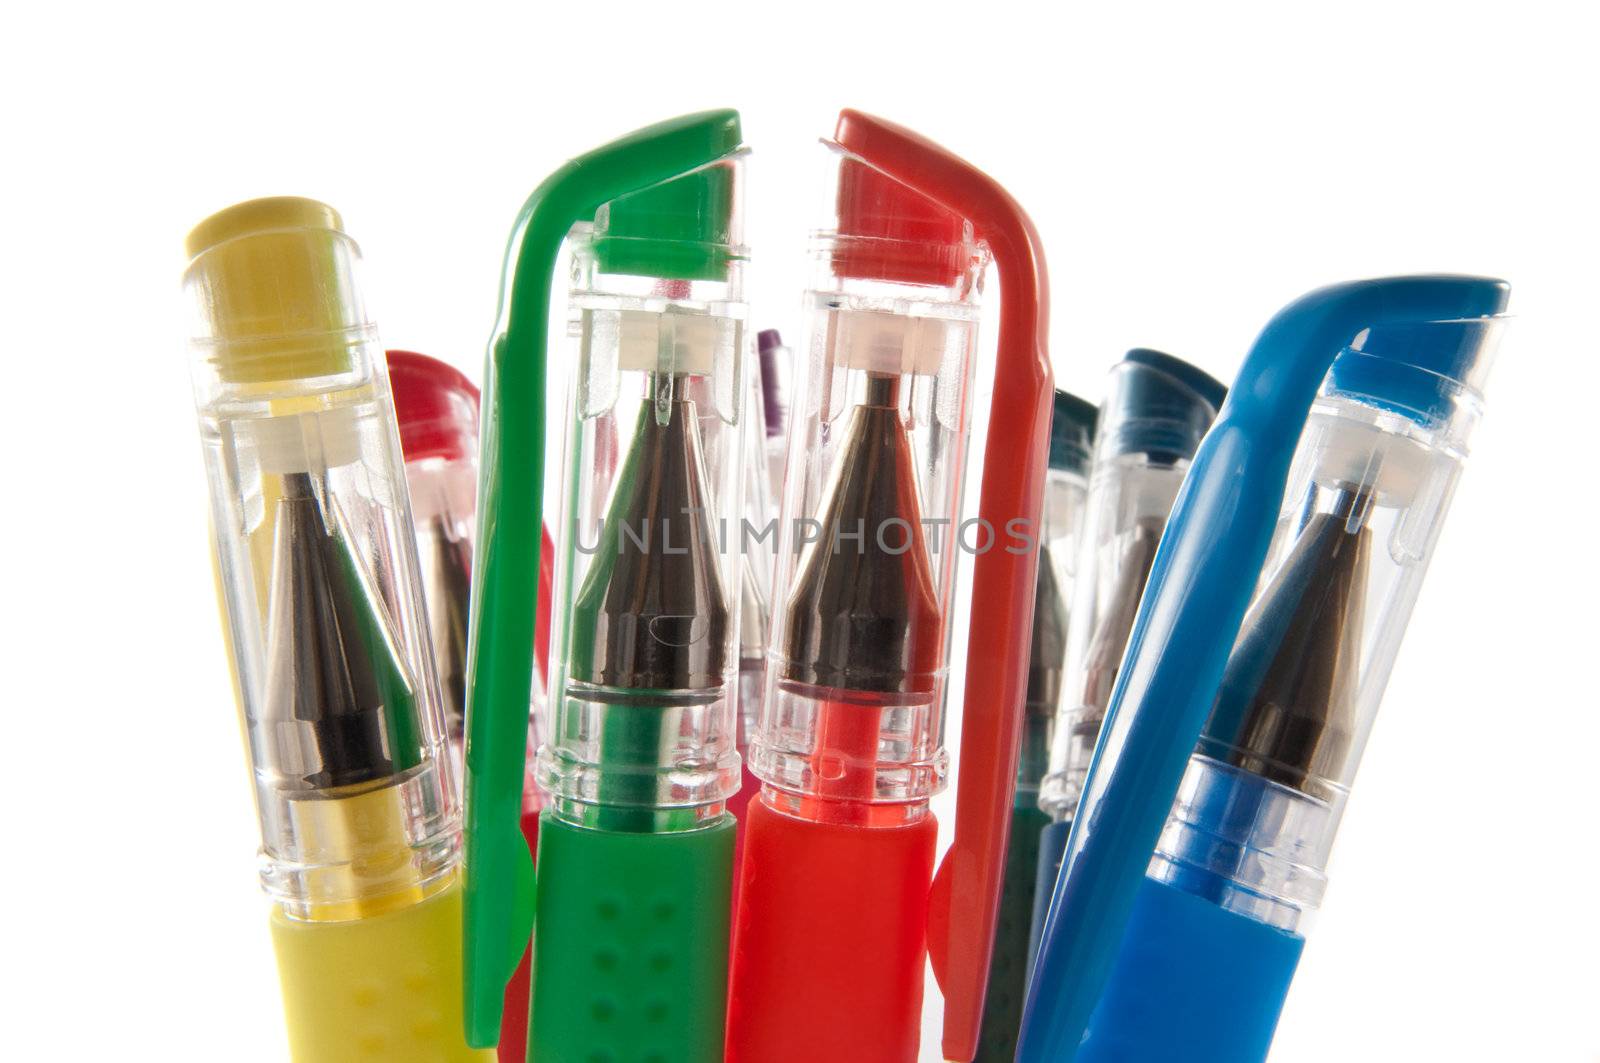 Assorted gel pens by 72soul